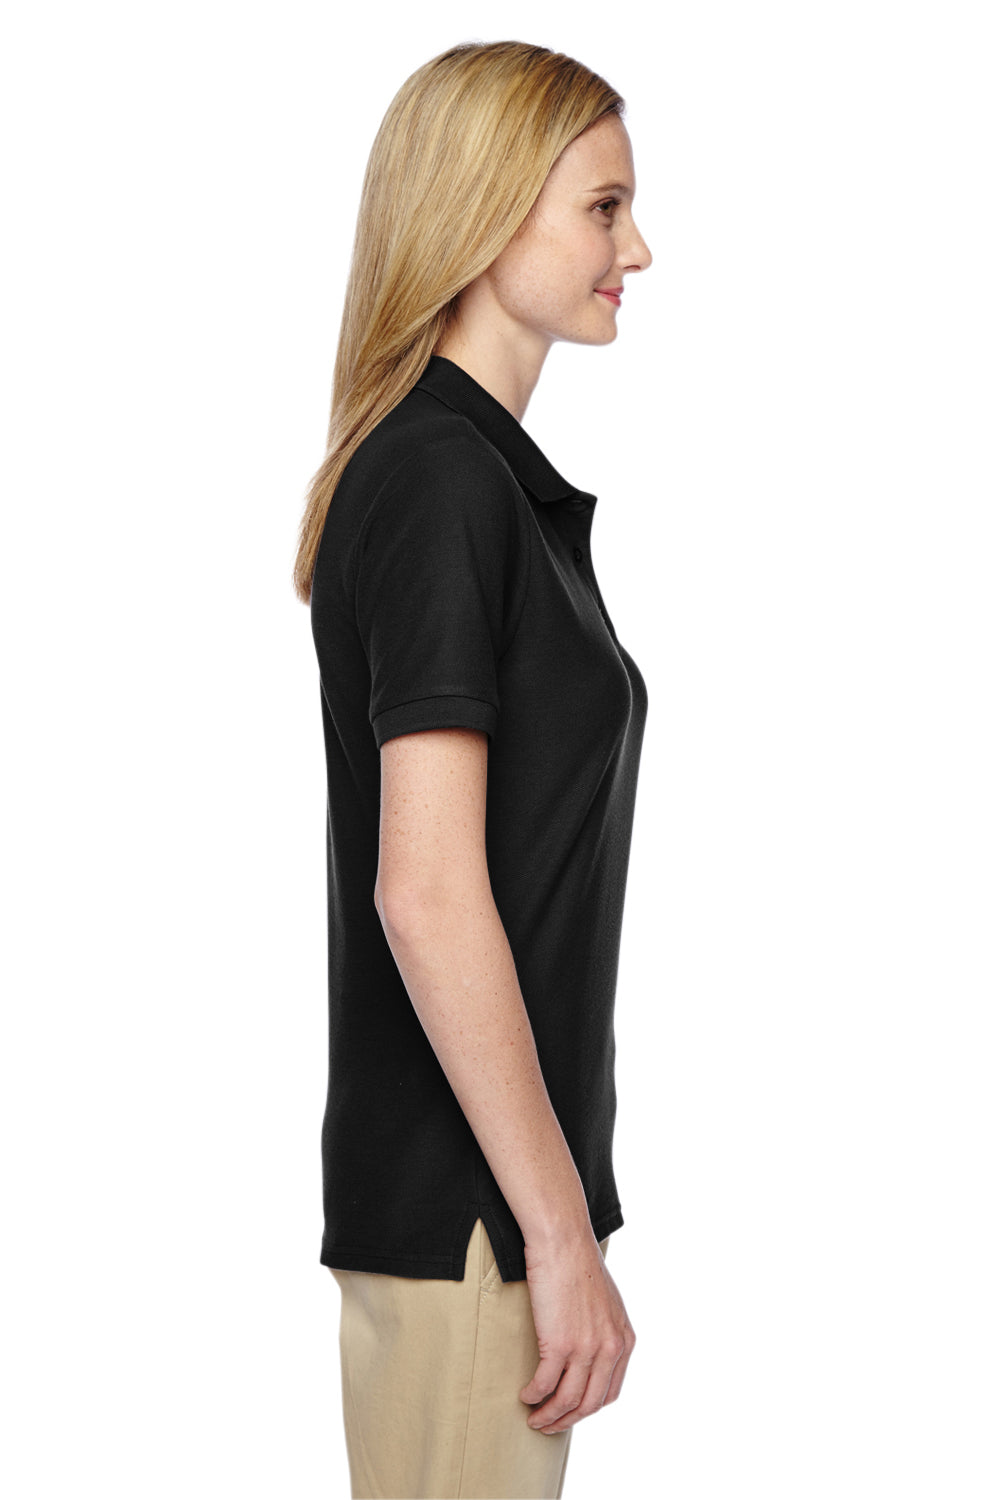 Jerzees 537WR Womens Easy Care Moisture Wicking Short Sleeve Polo Shirt Black Side